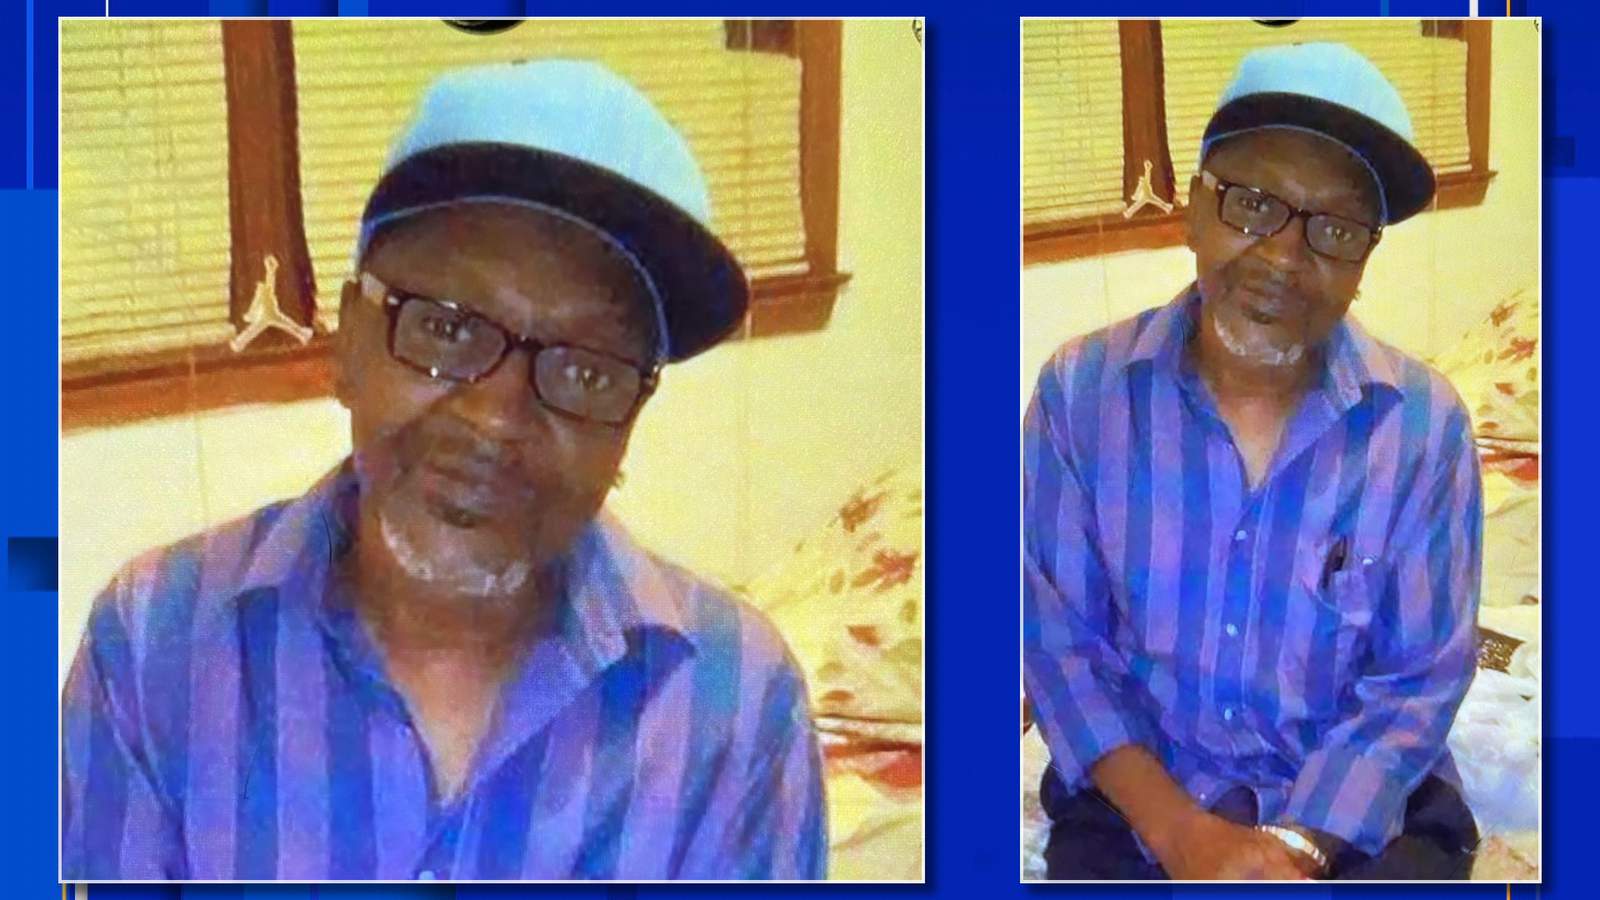 Detroit police seek missing 64-year-old man last seen Friday